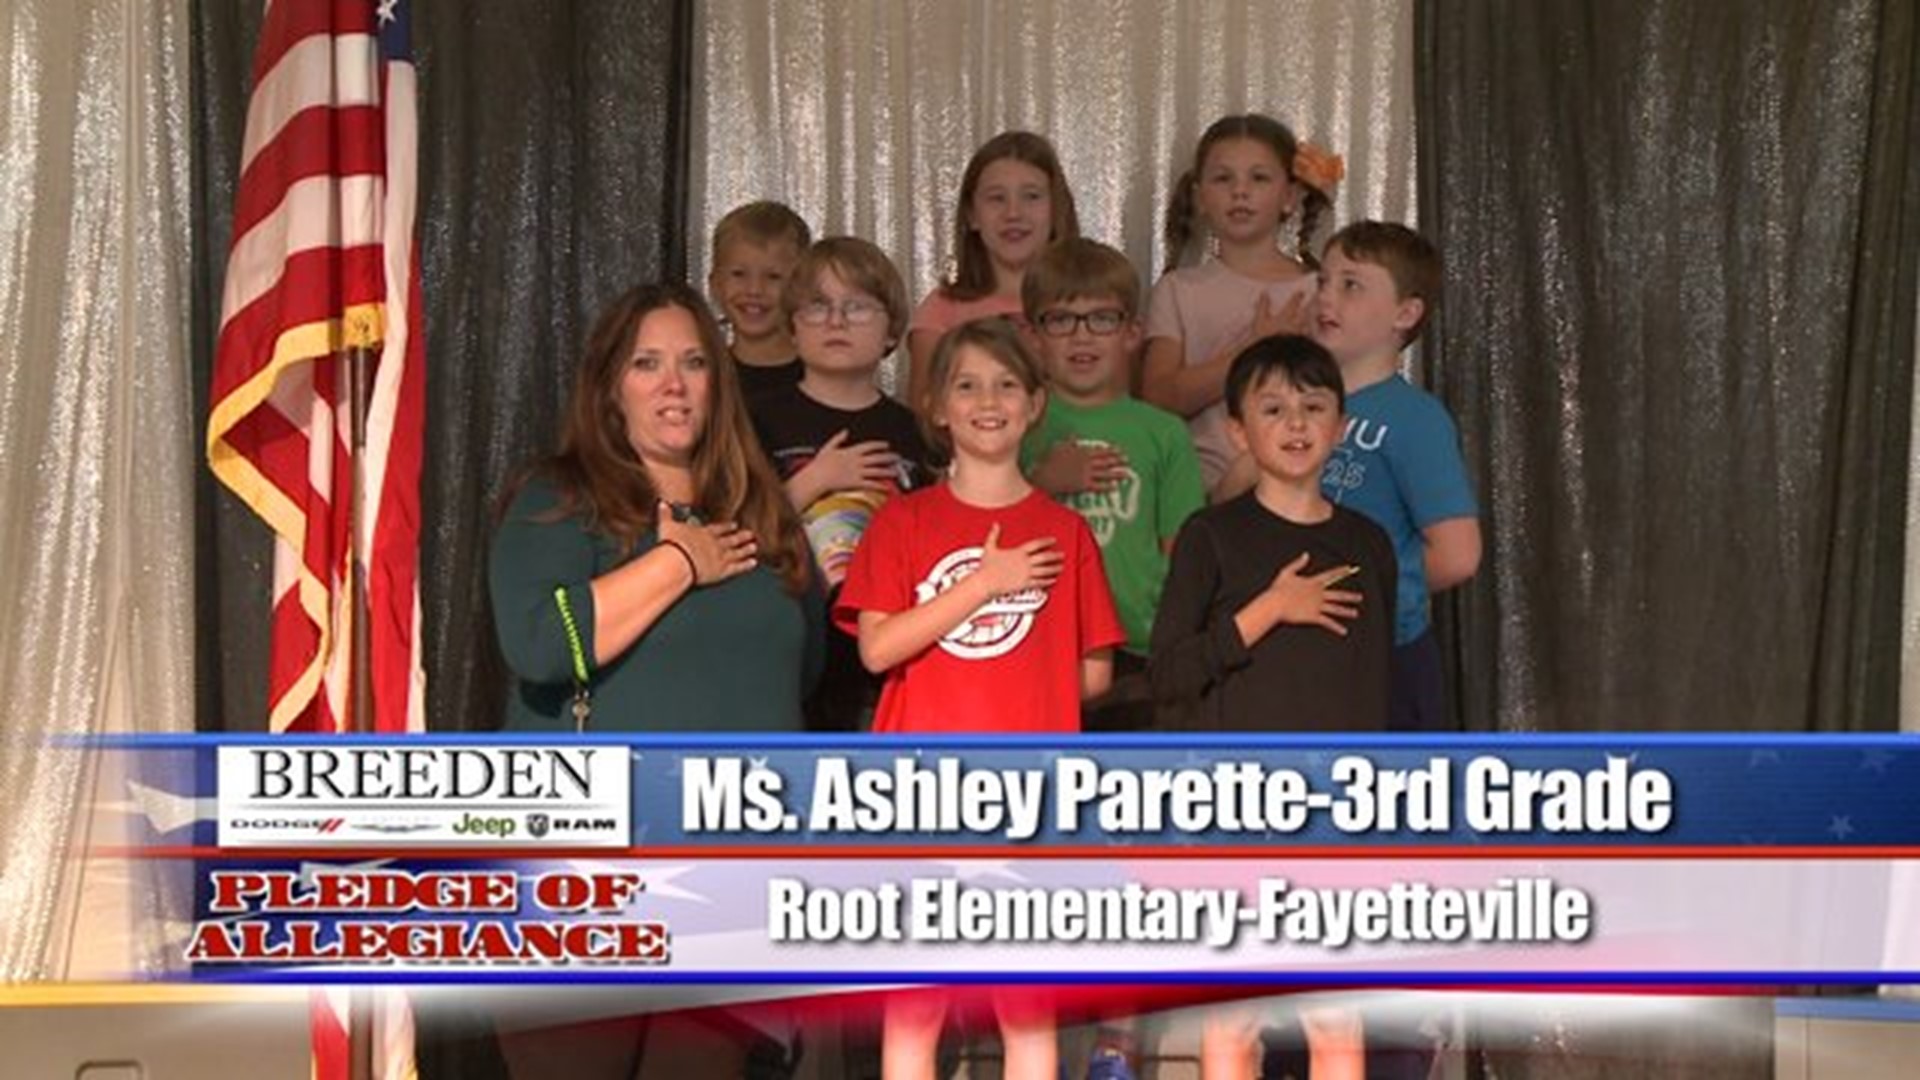 Root Elementary, Fayetteville - Ms. Ashley Parette - 3rd Grade